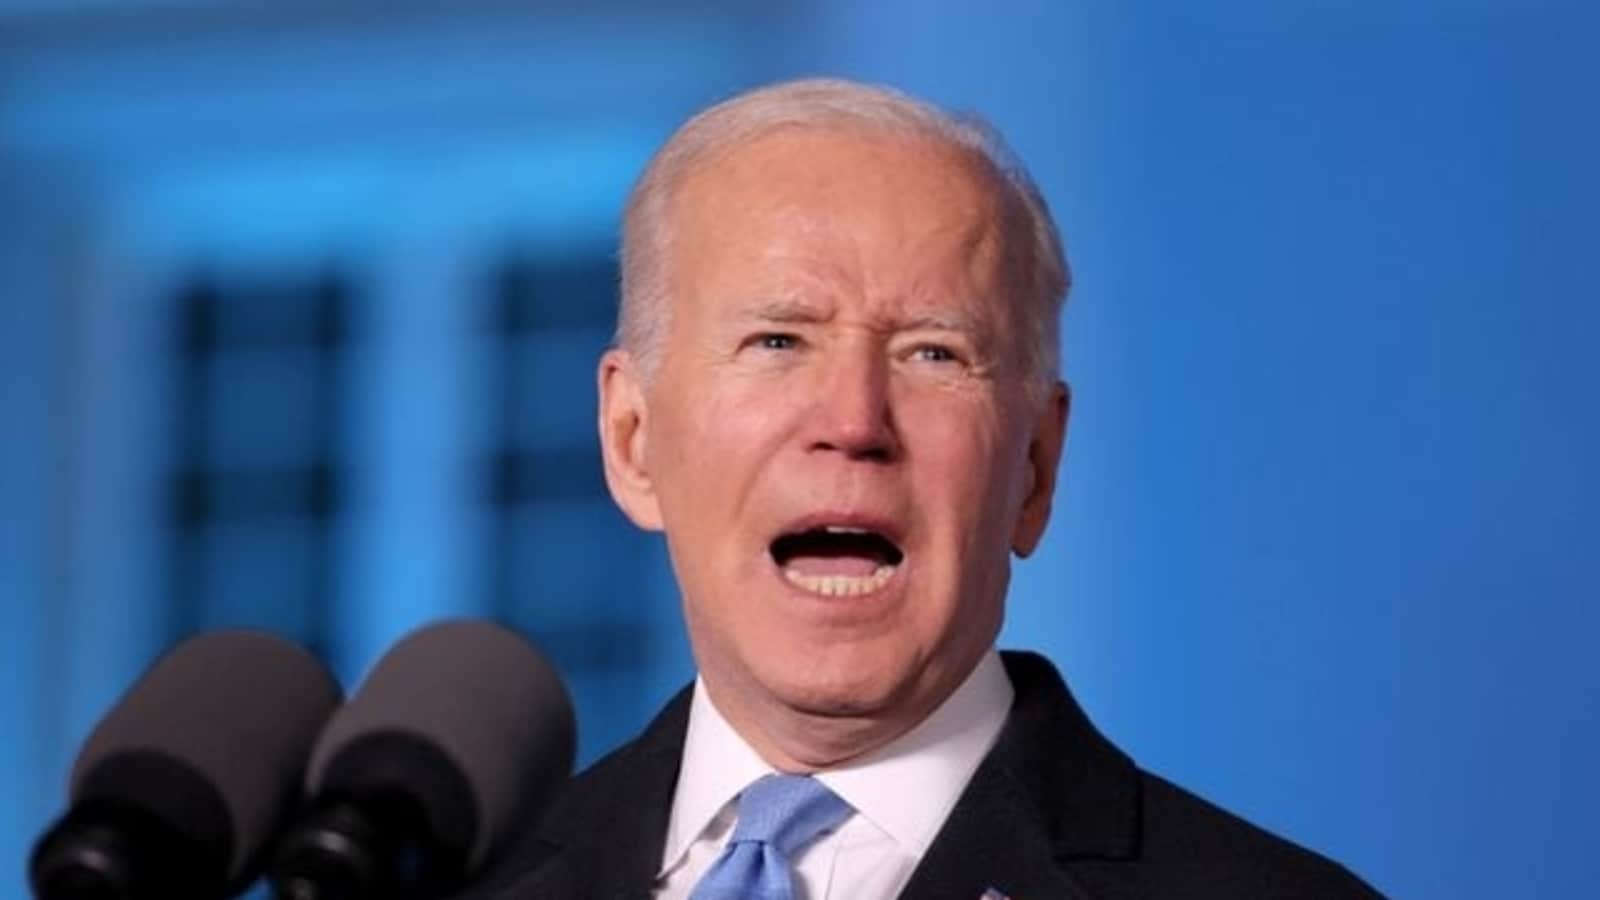 Joe Biden ‘gaffe’ on Vladimir Putin scrambles US message on Ukraine